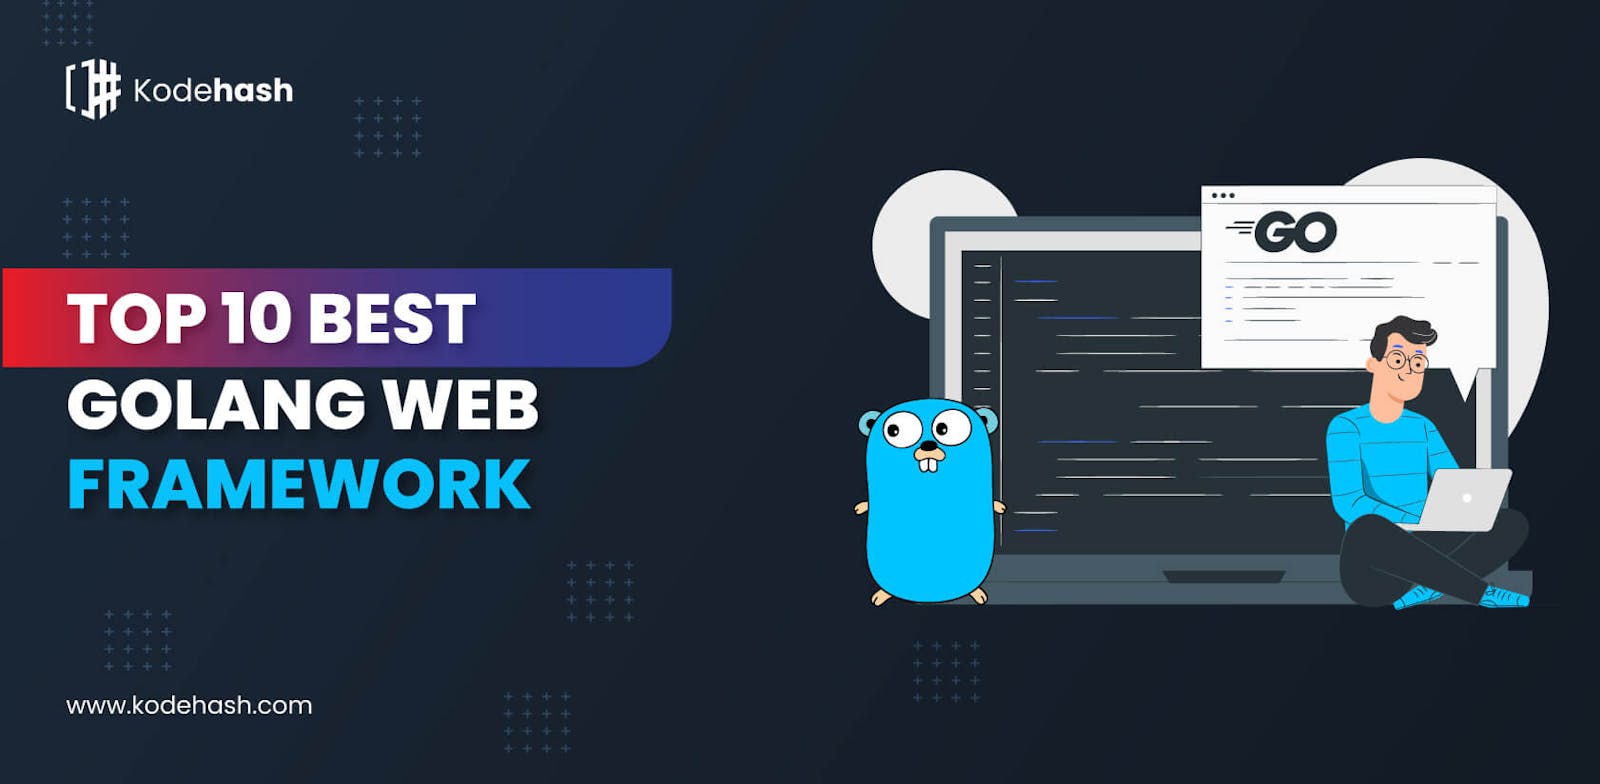 Exploring the Top 10 Golang Web Frameworks